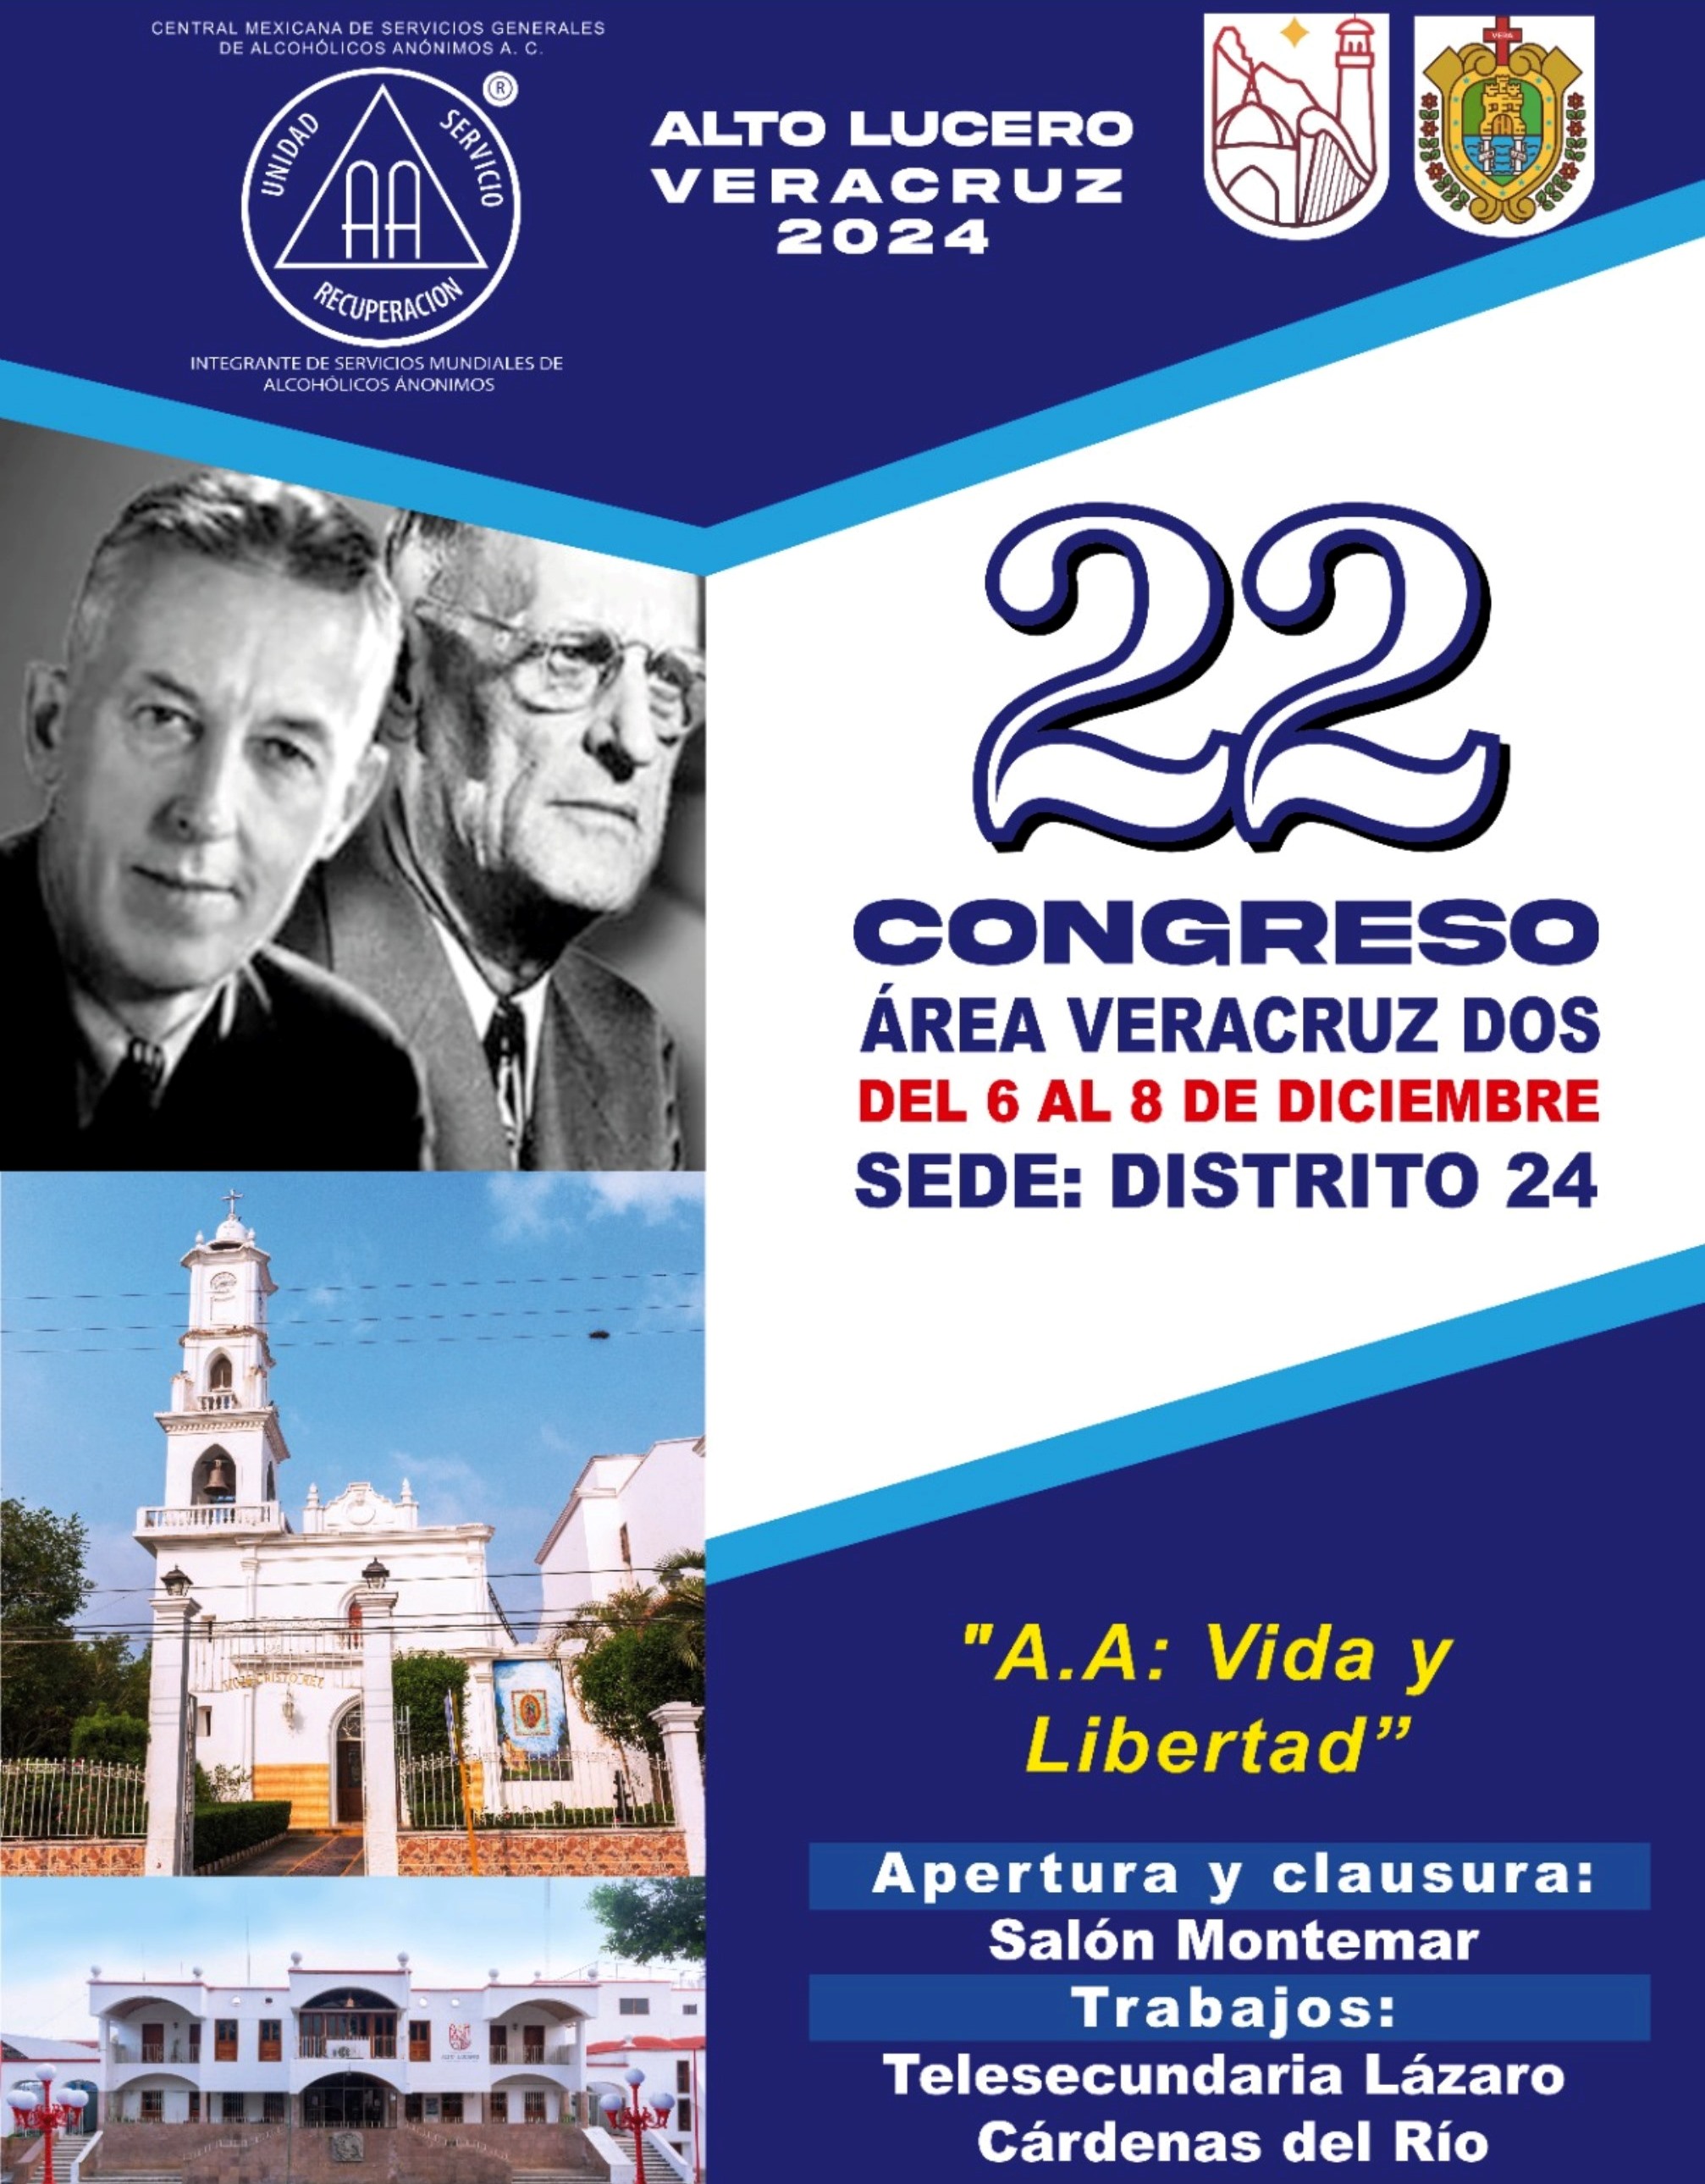 22 Congreso de Área Veracruz Dos: Diciembre